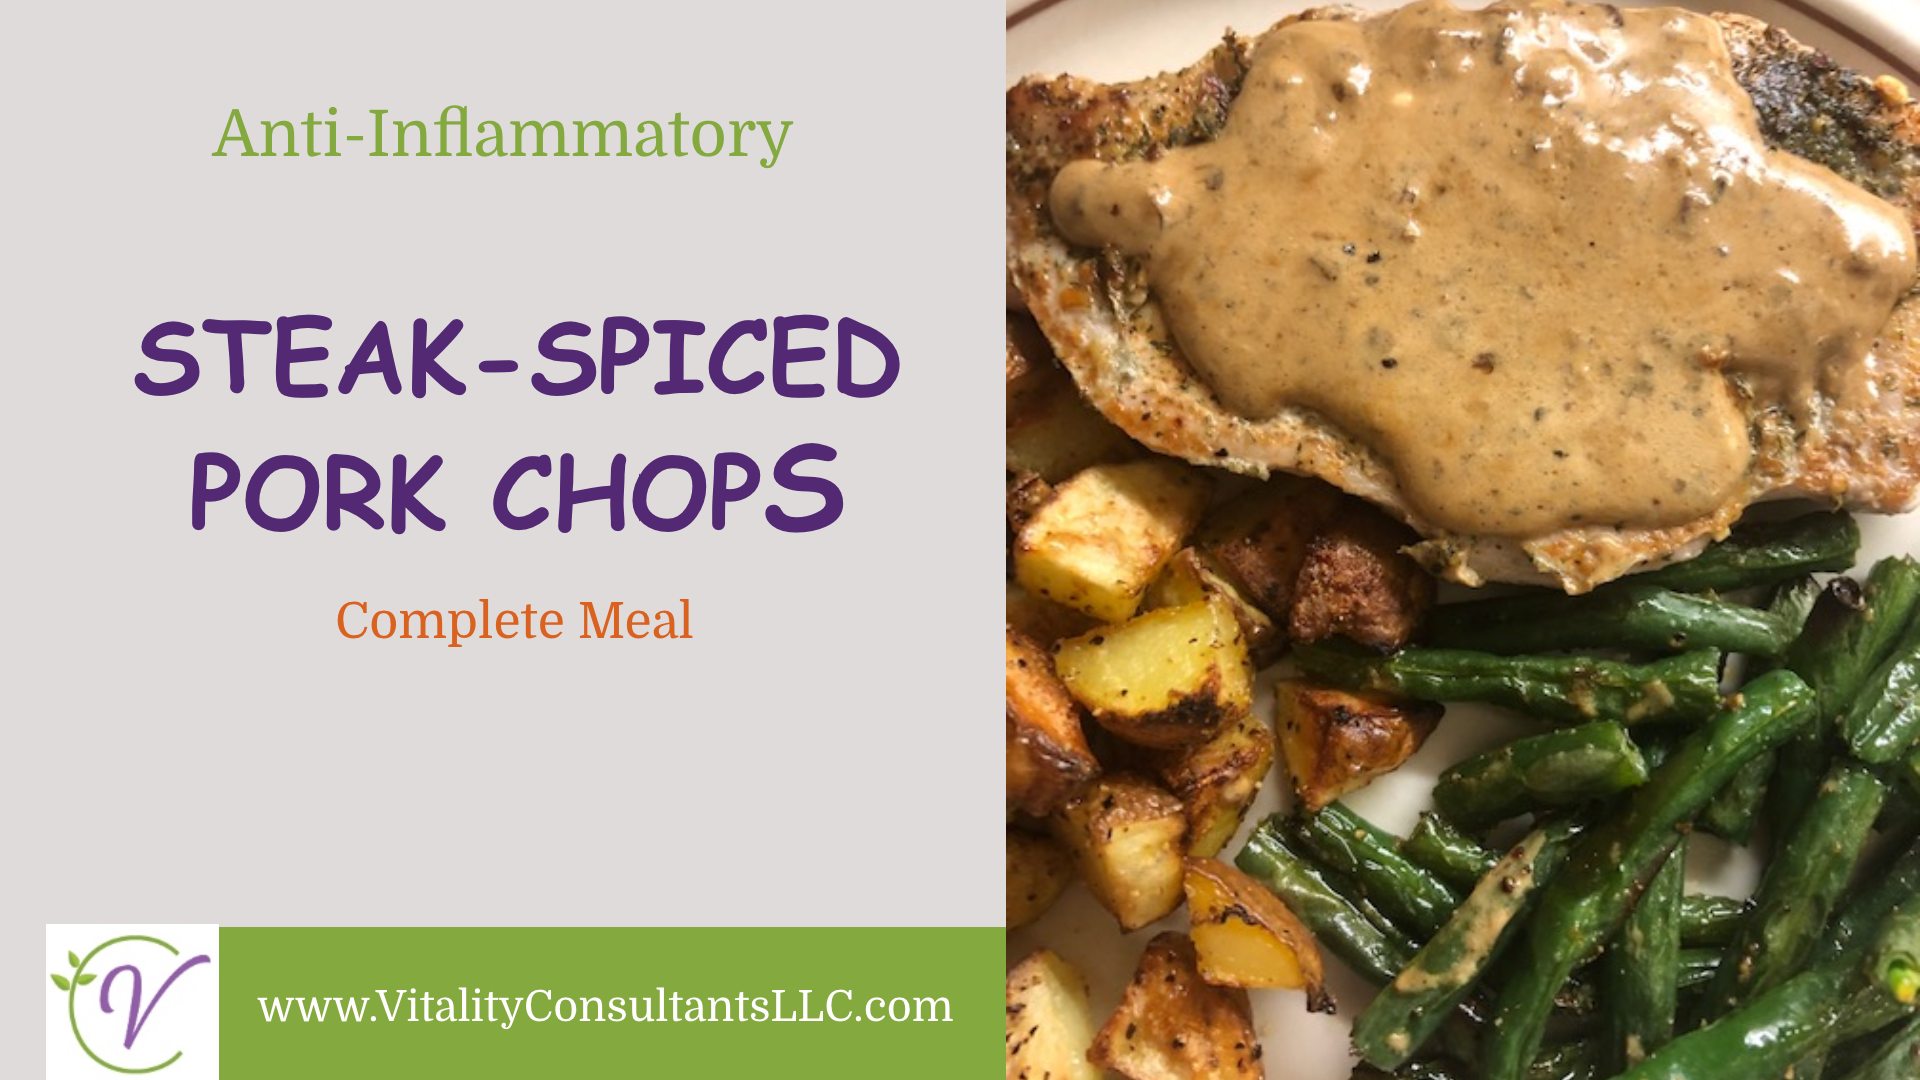 Steak-Spiced Pork Chops